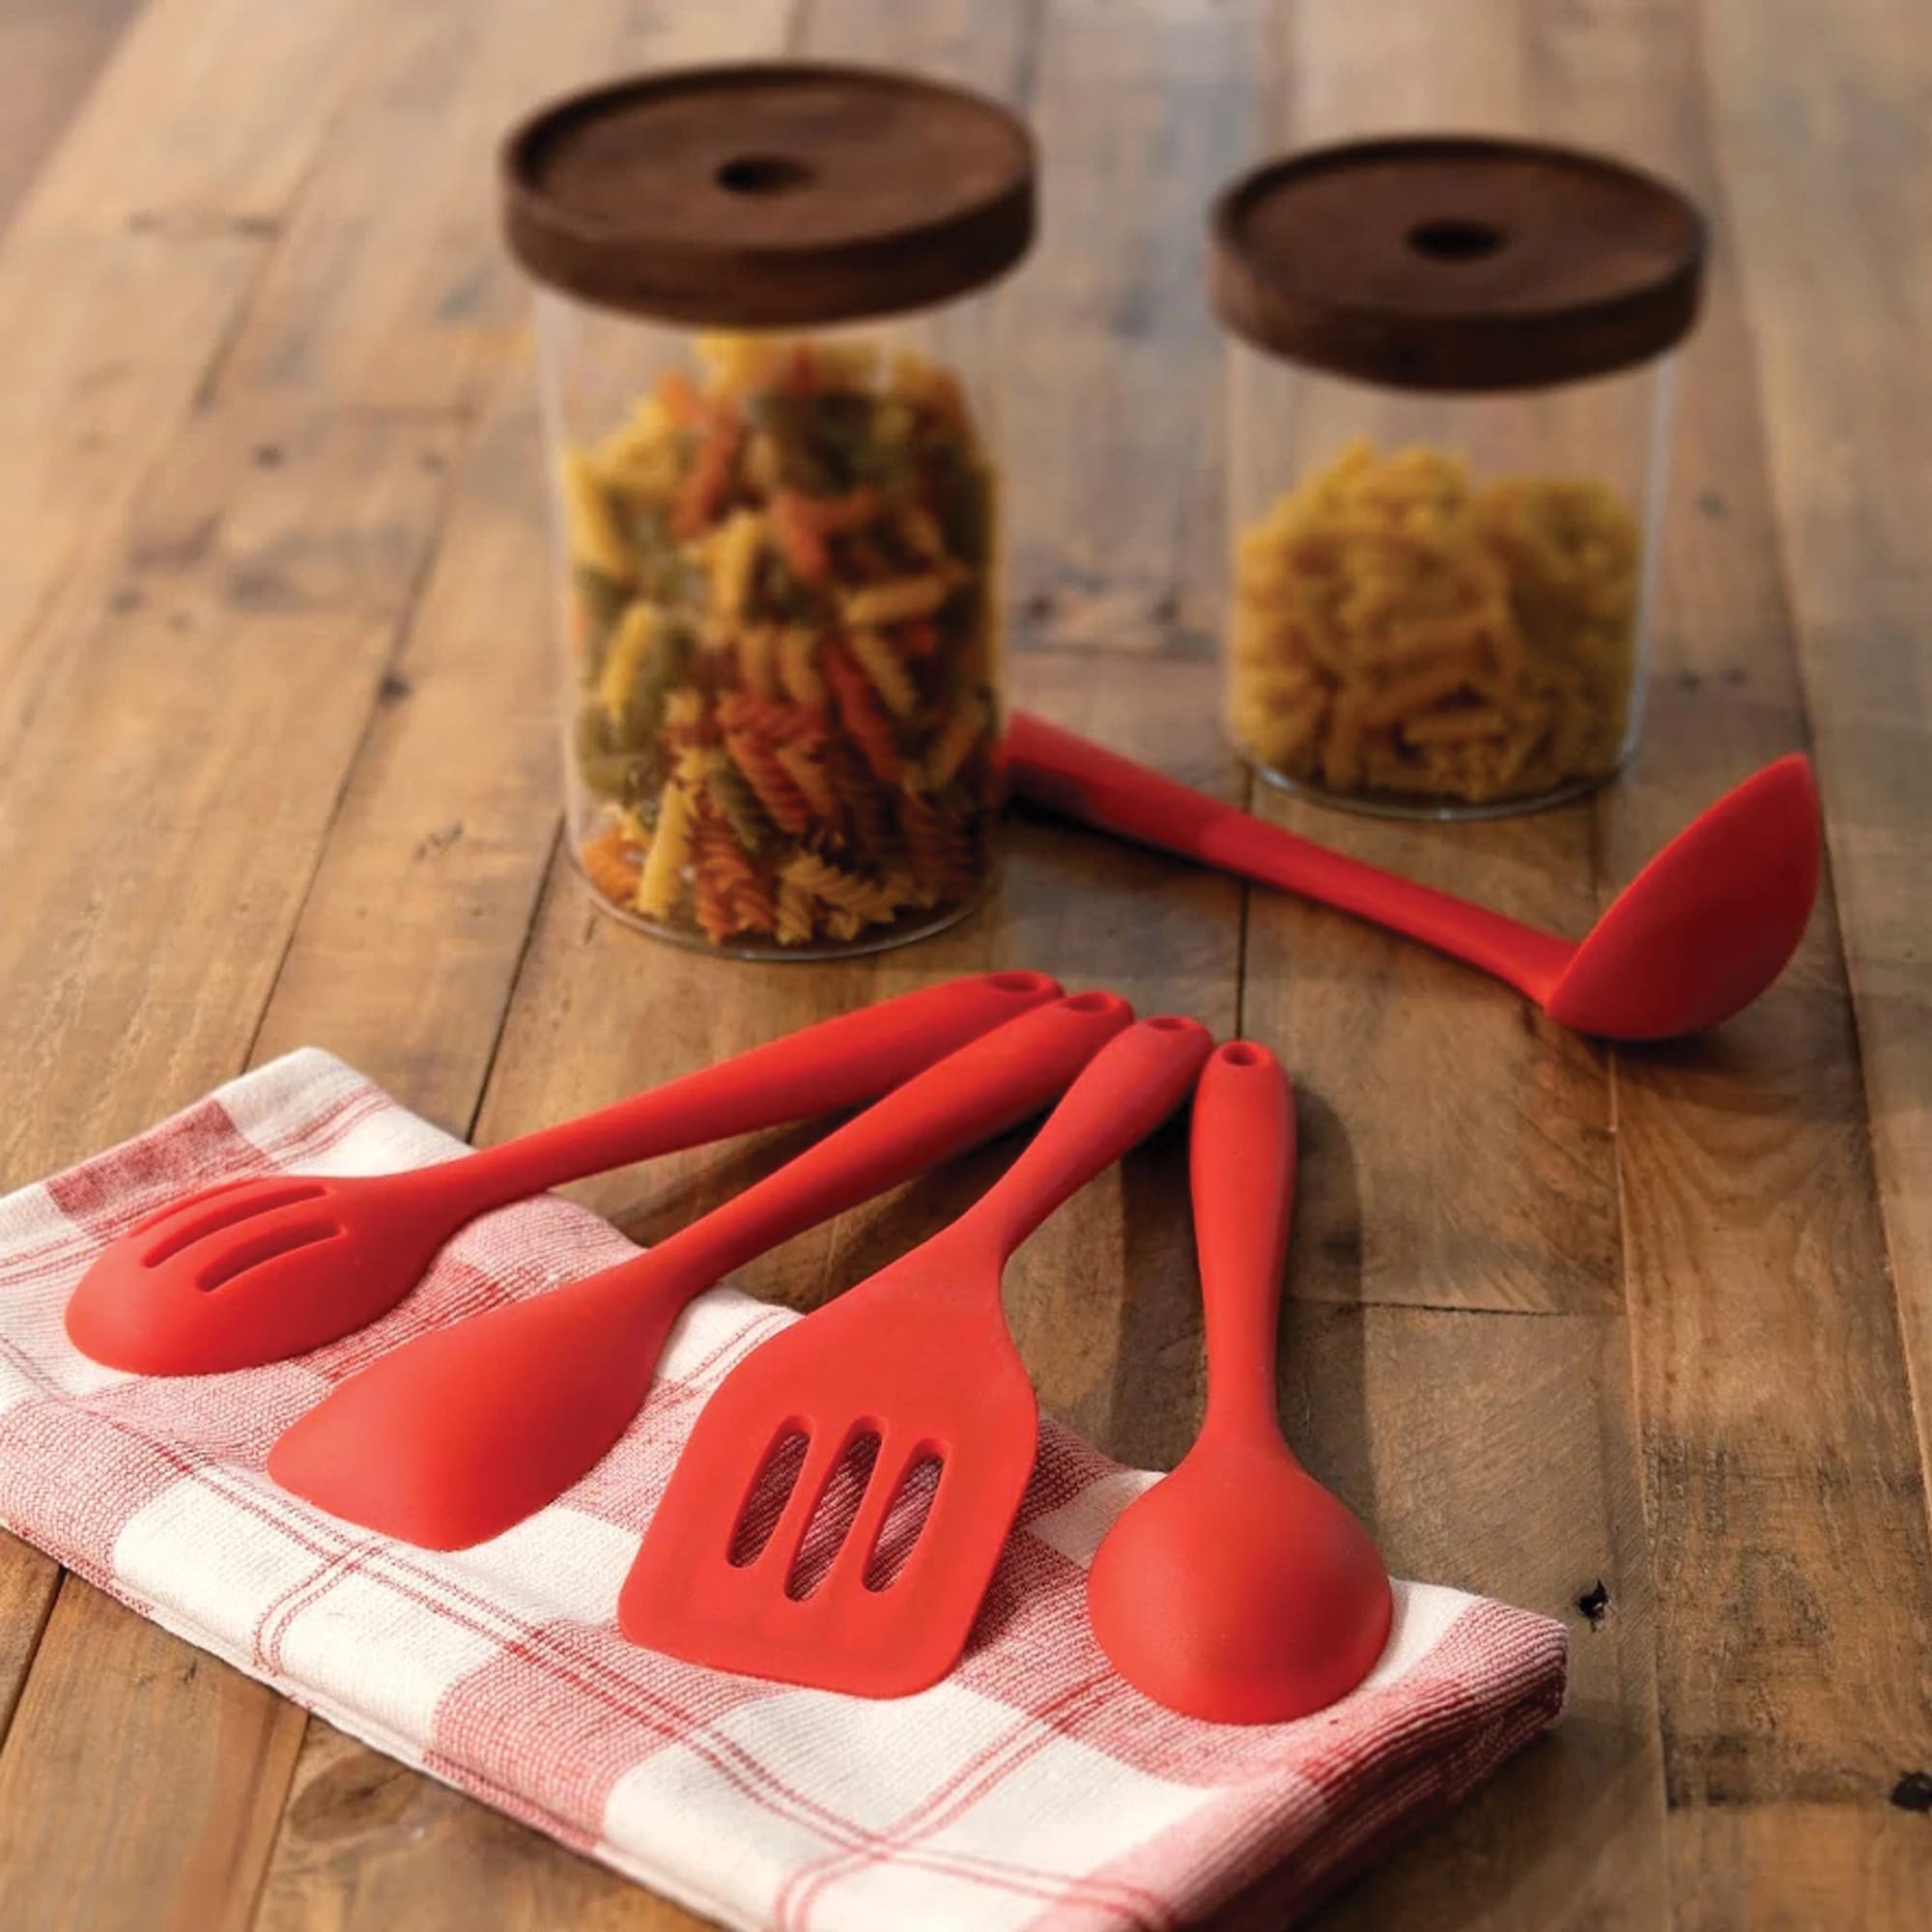 5 Pcs Silicone Cooking Utensils Kitchen Utensil Set-Heat Resistant-Kitchen  Gadgets Cookware Set. 